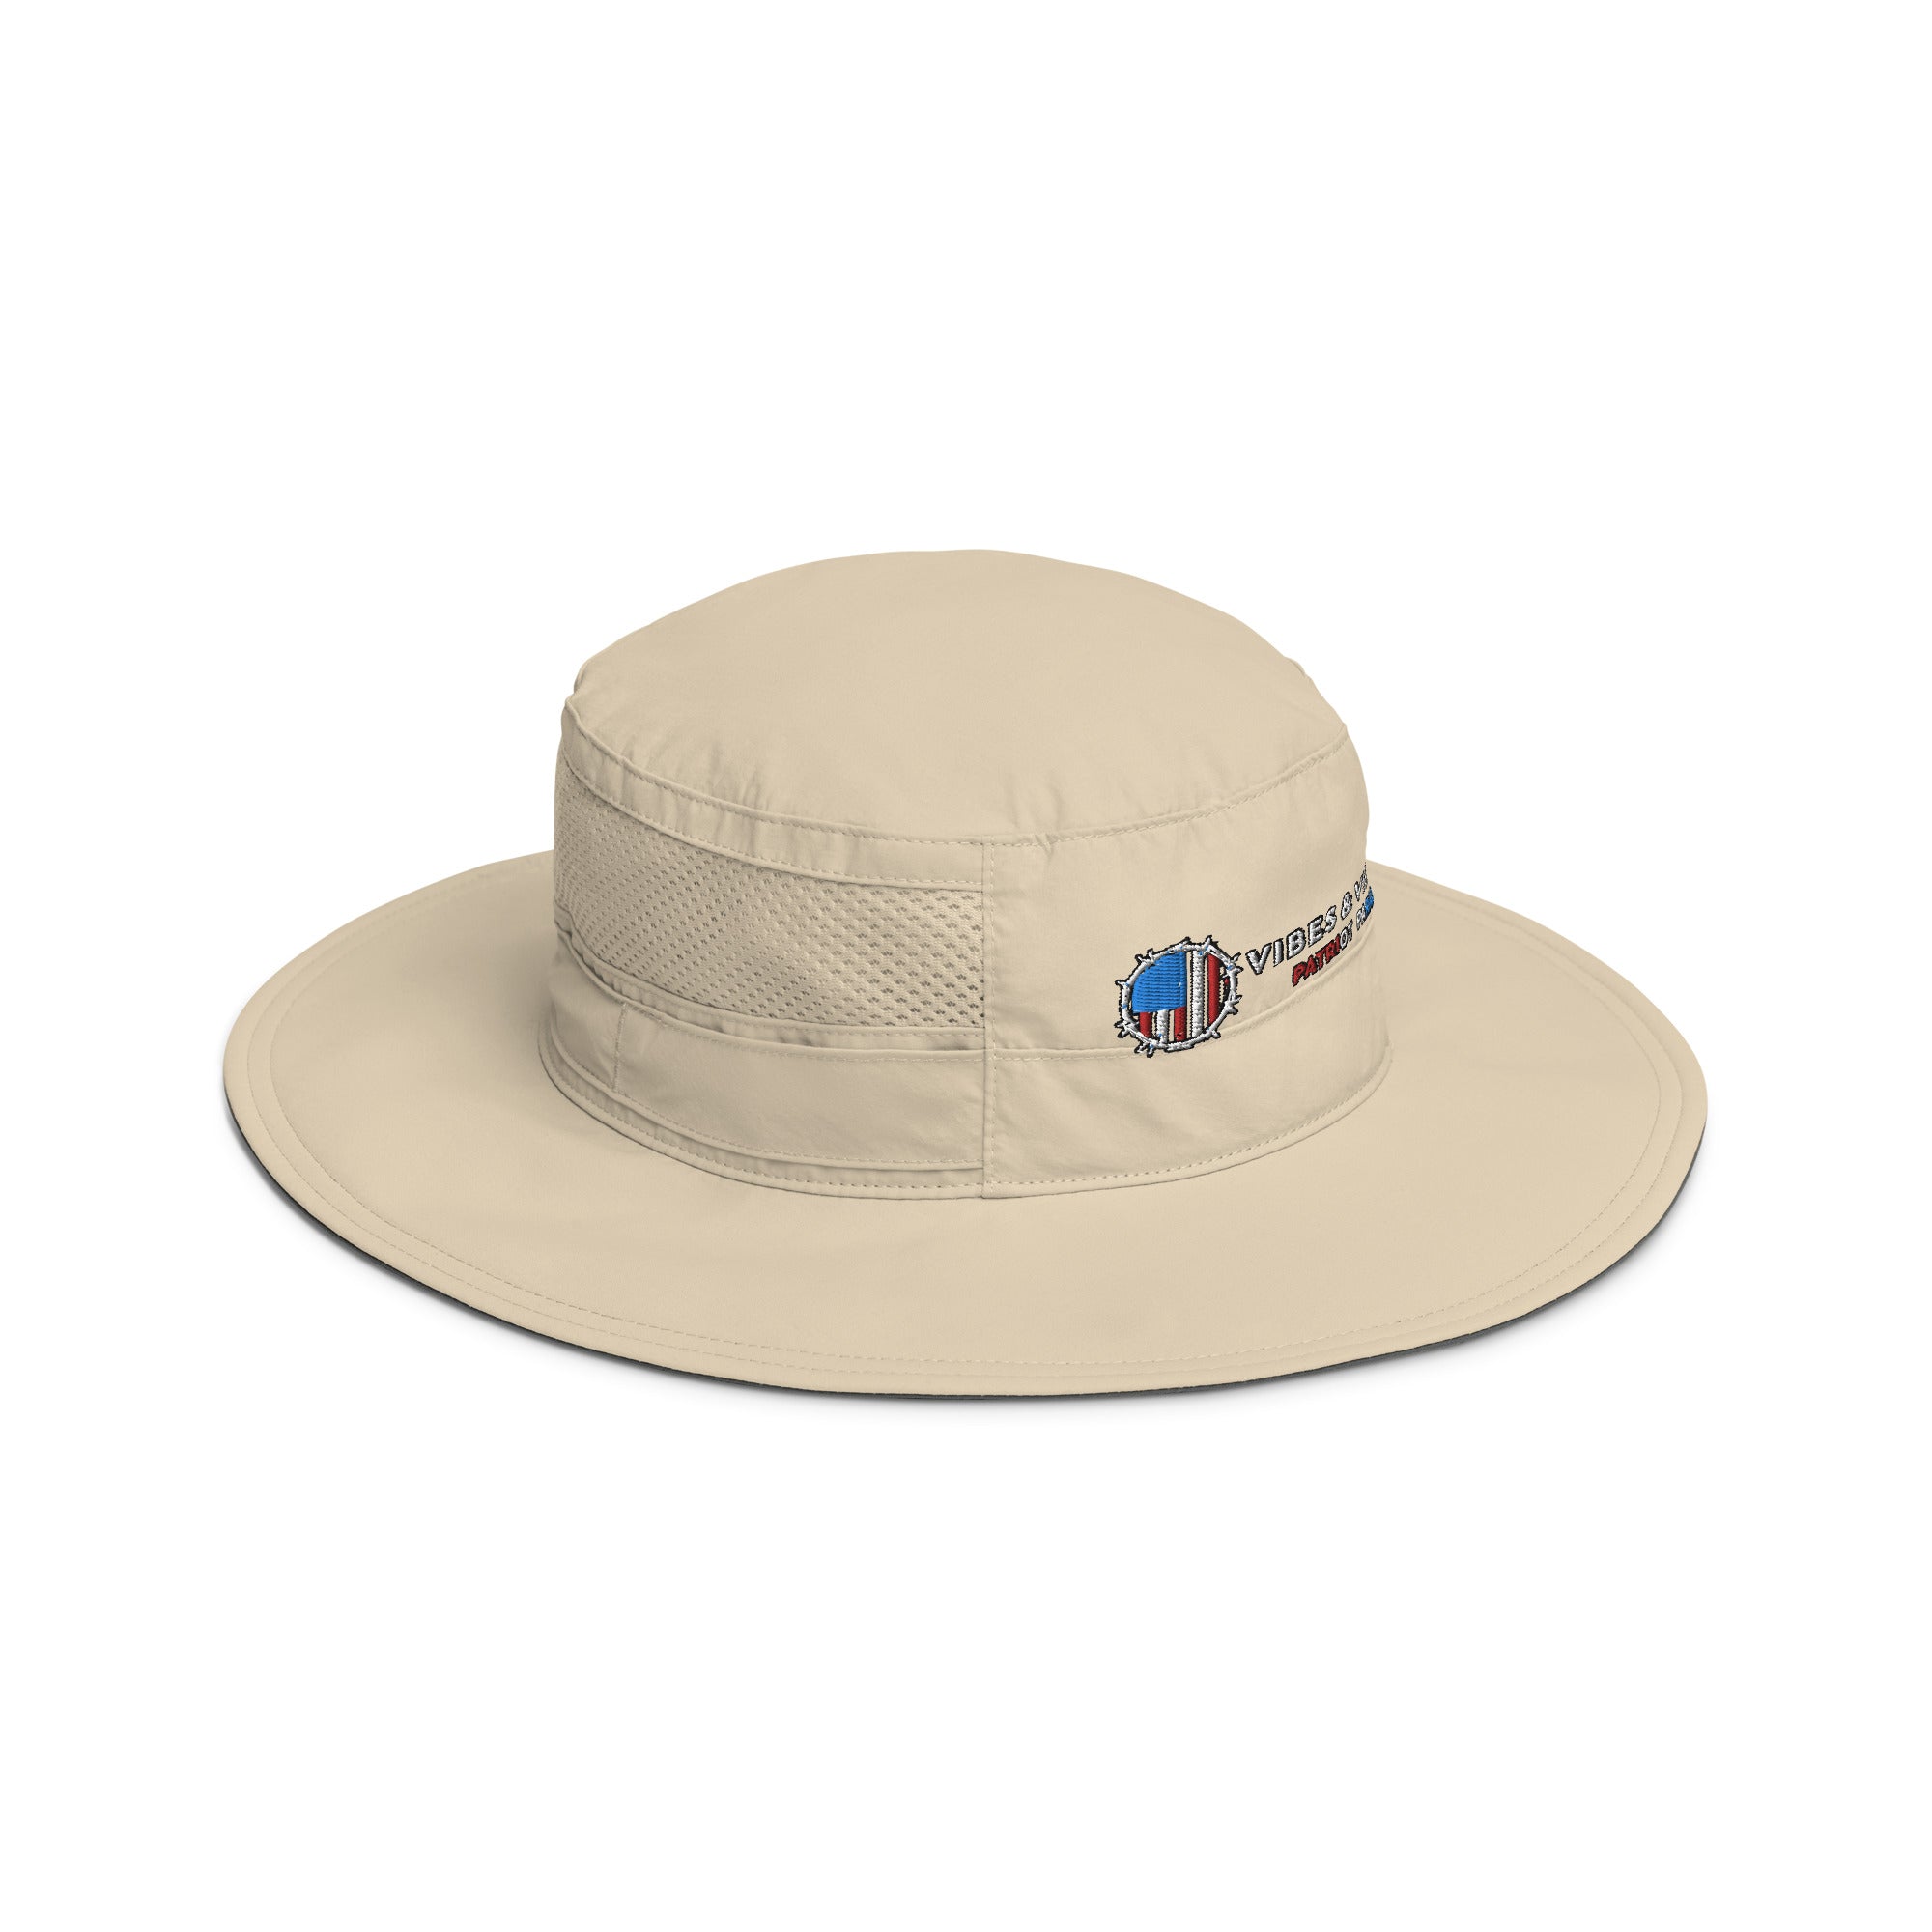 Patriot Paradox Explorer Hat by Columbia